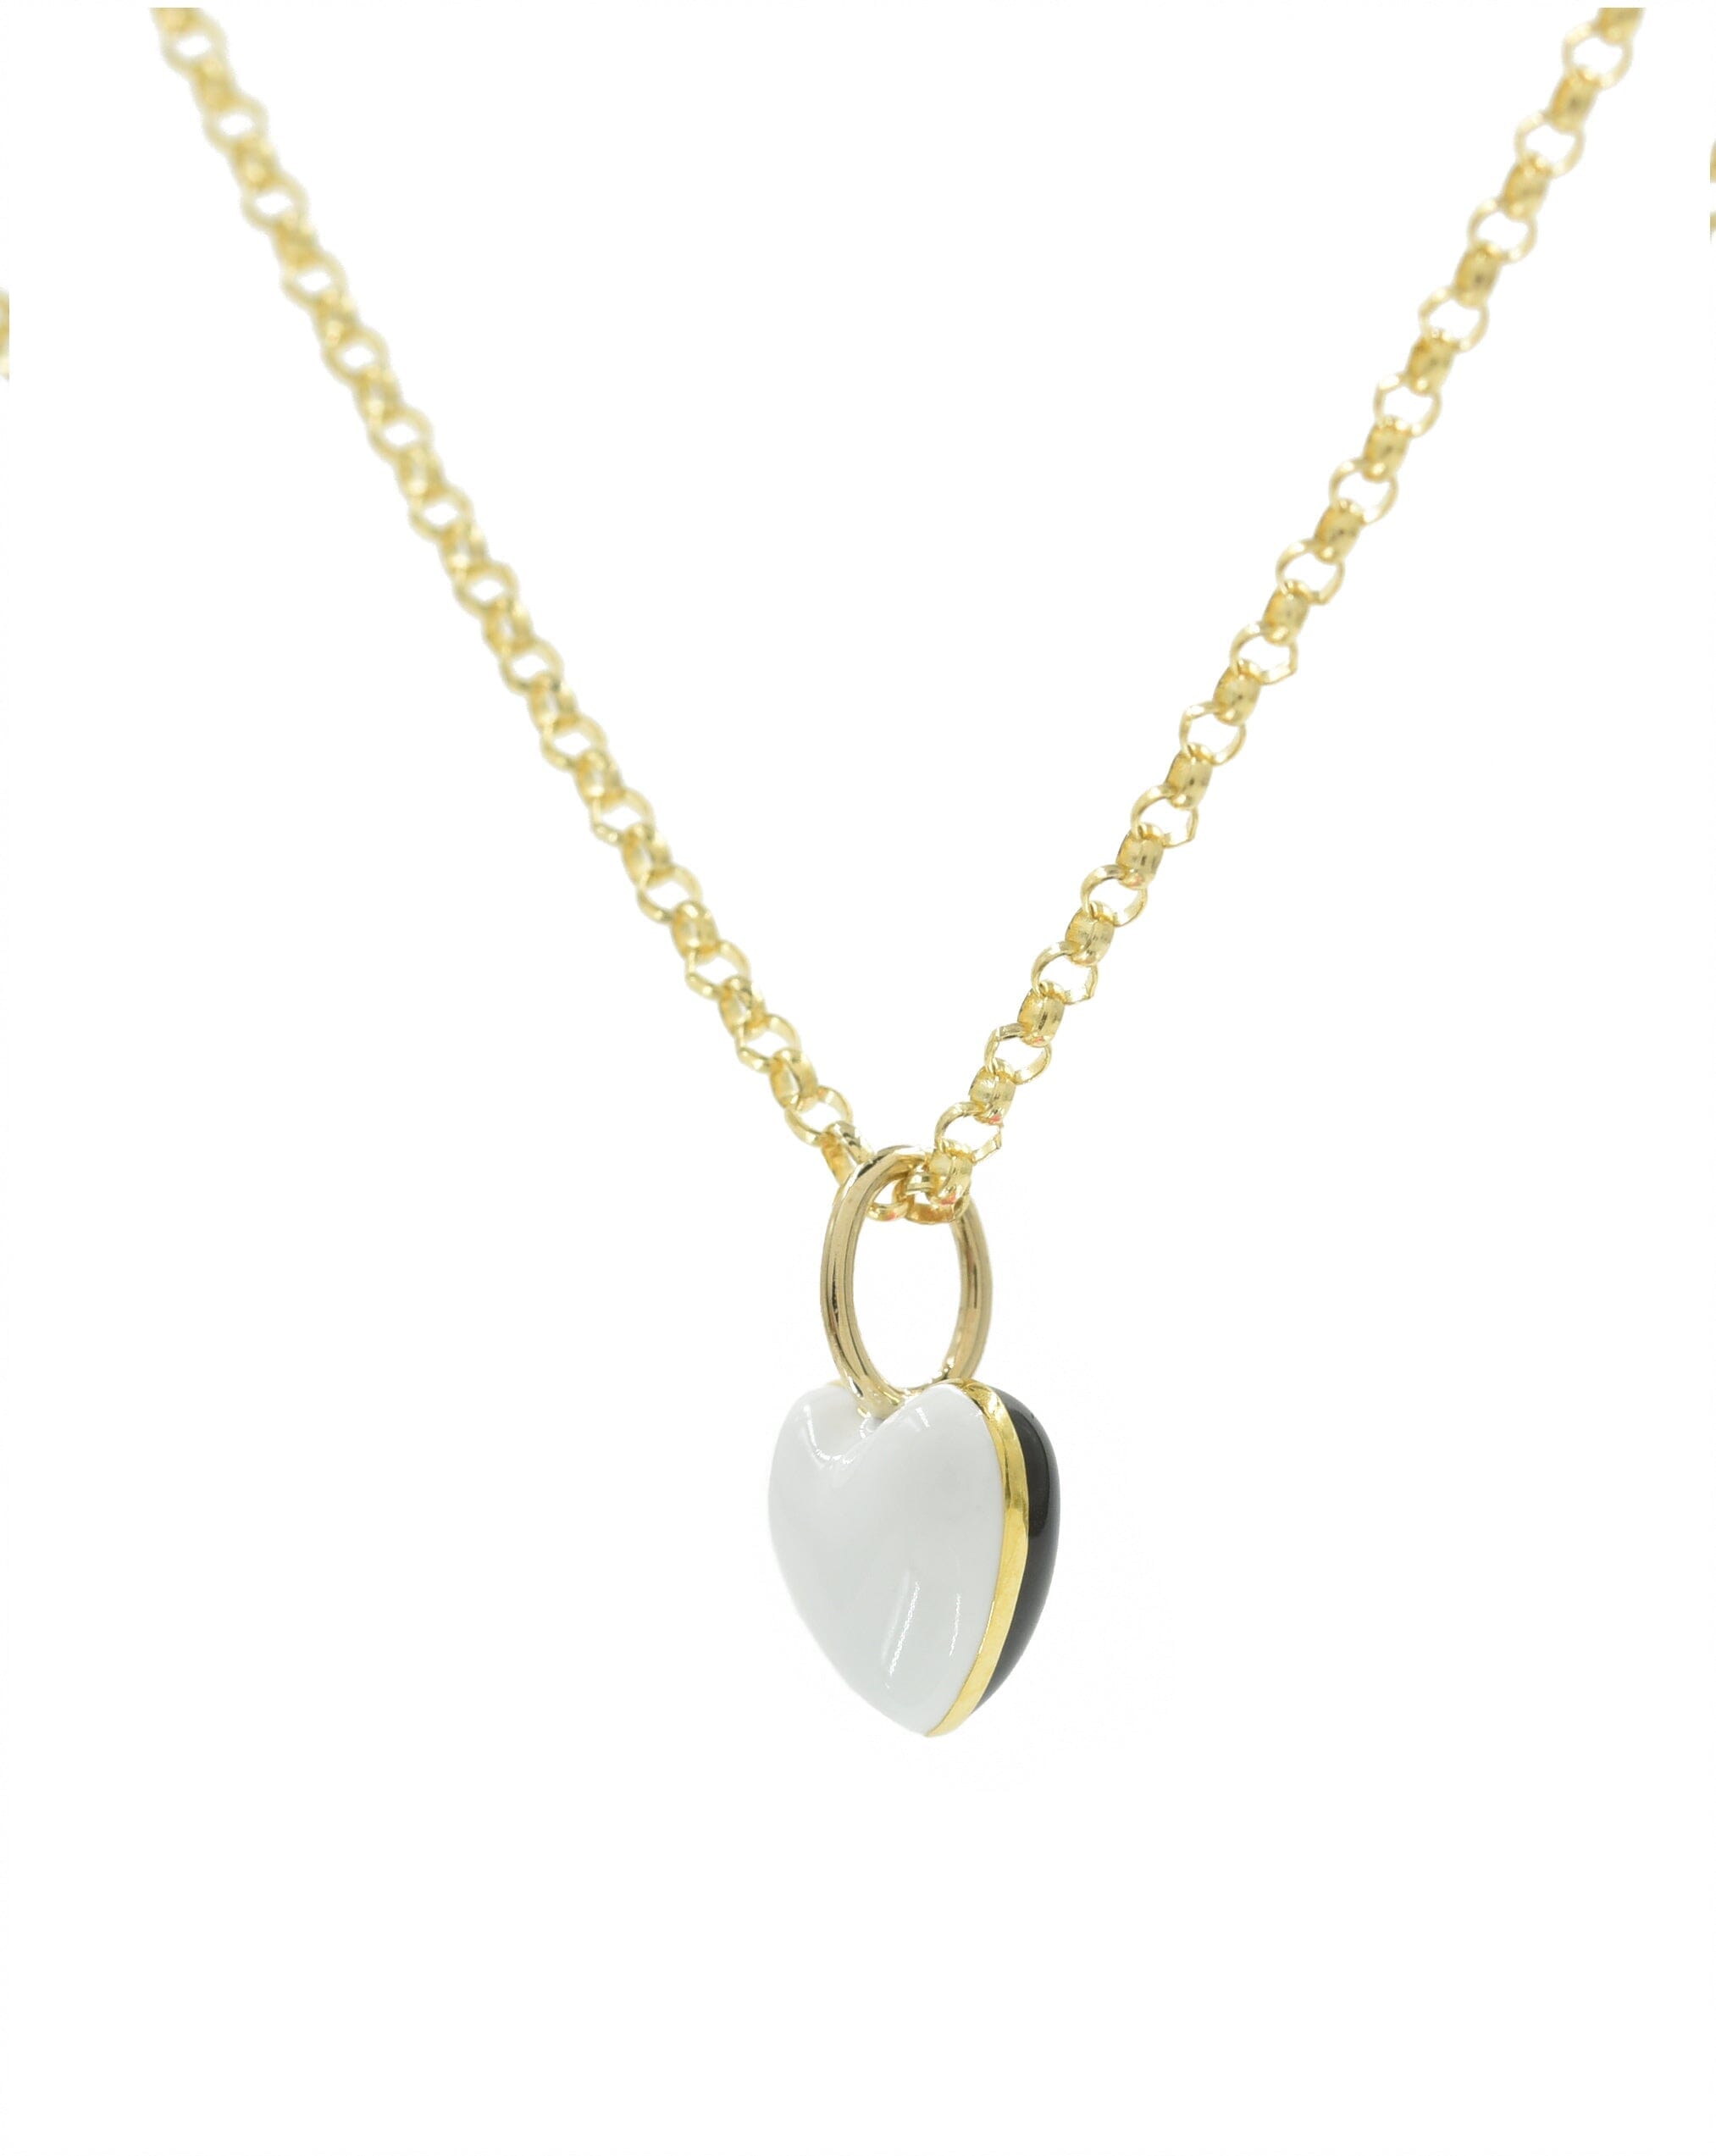 Black + White Enamel Heart Necklaces - BONDEYE JEWELRY ®